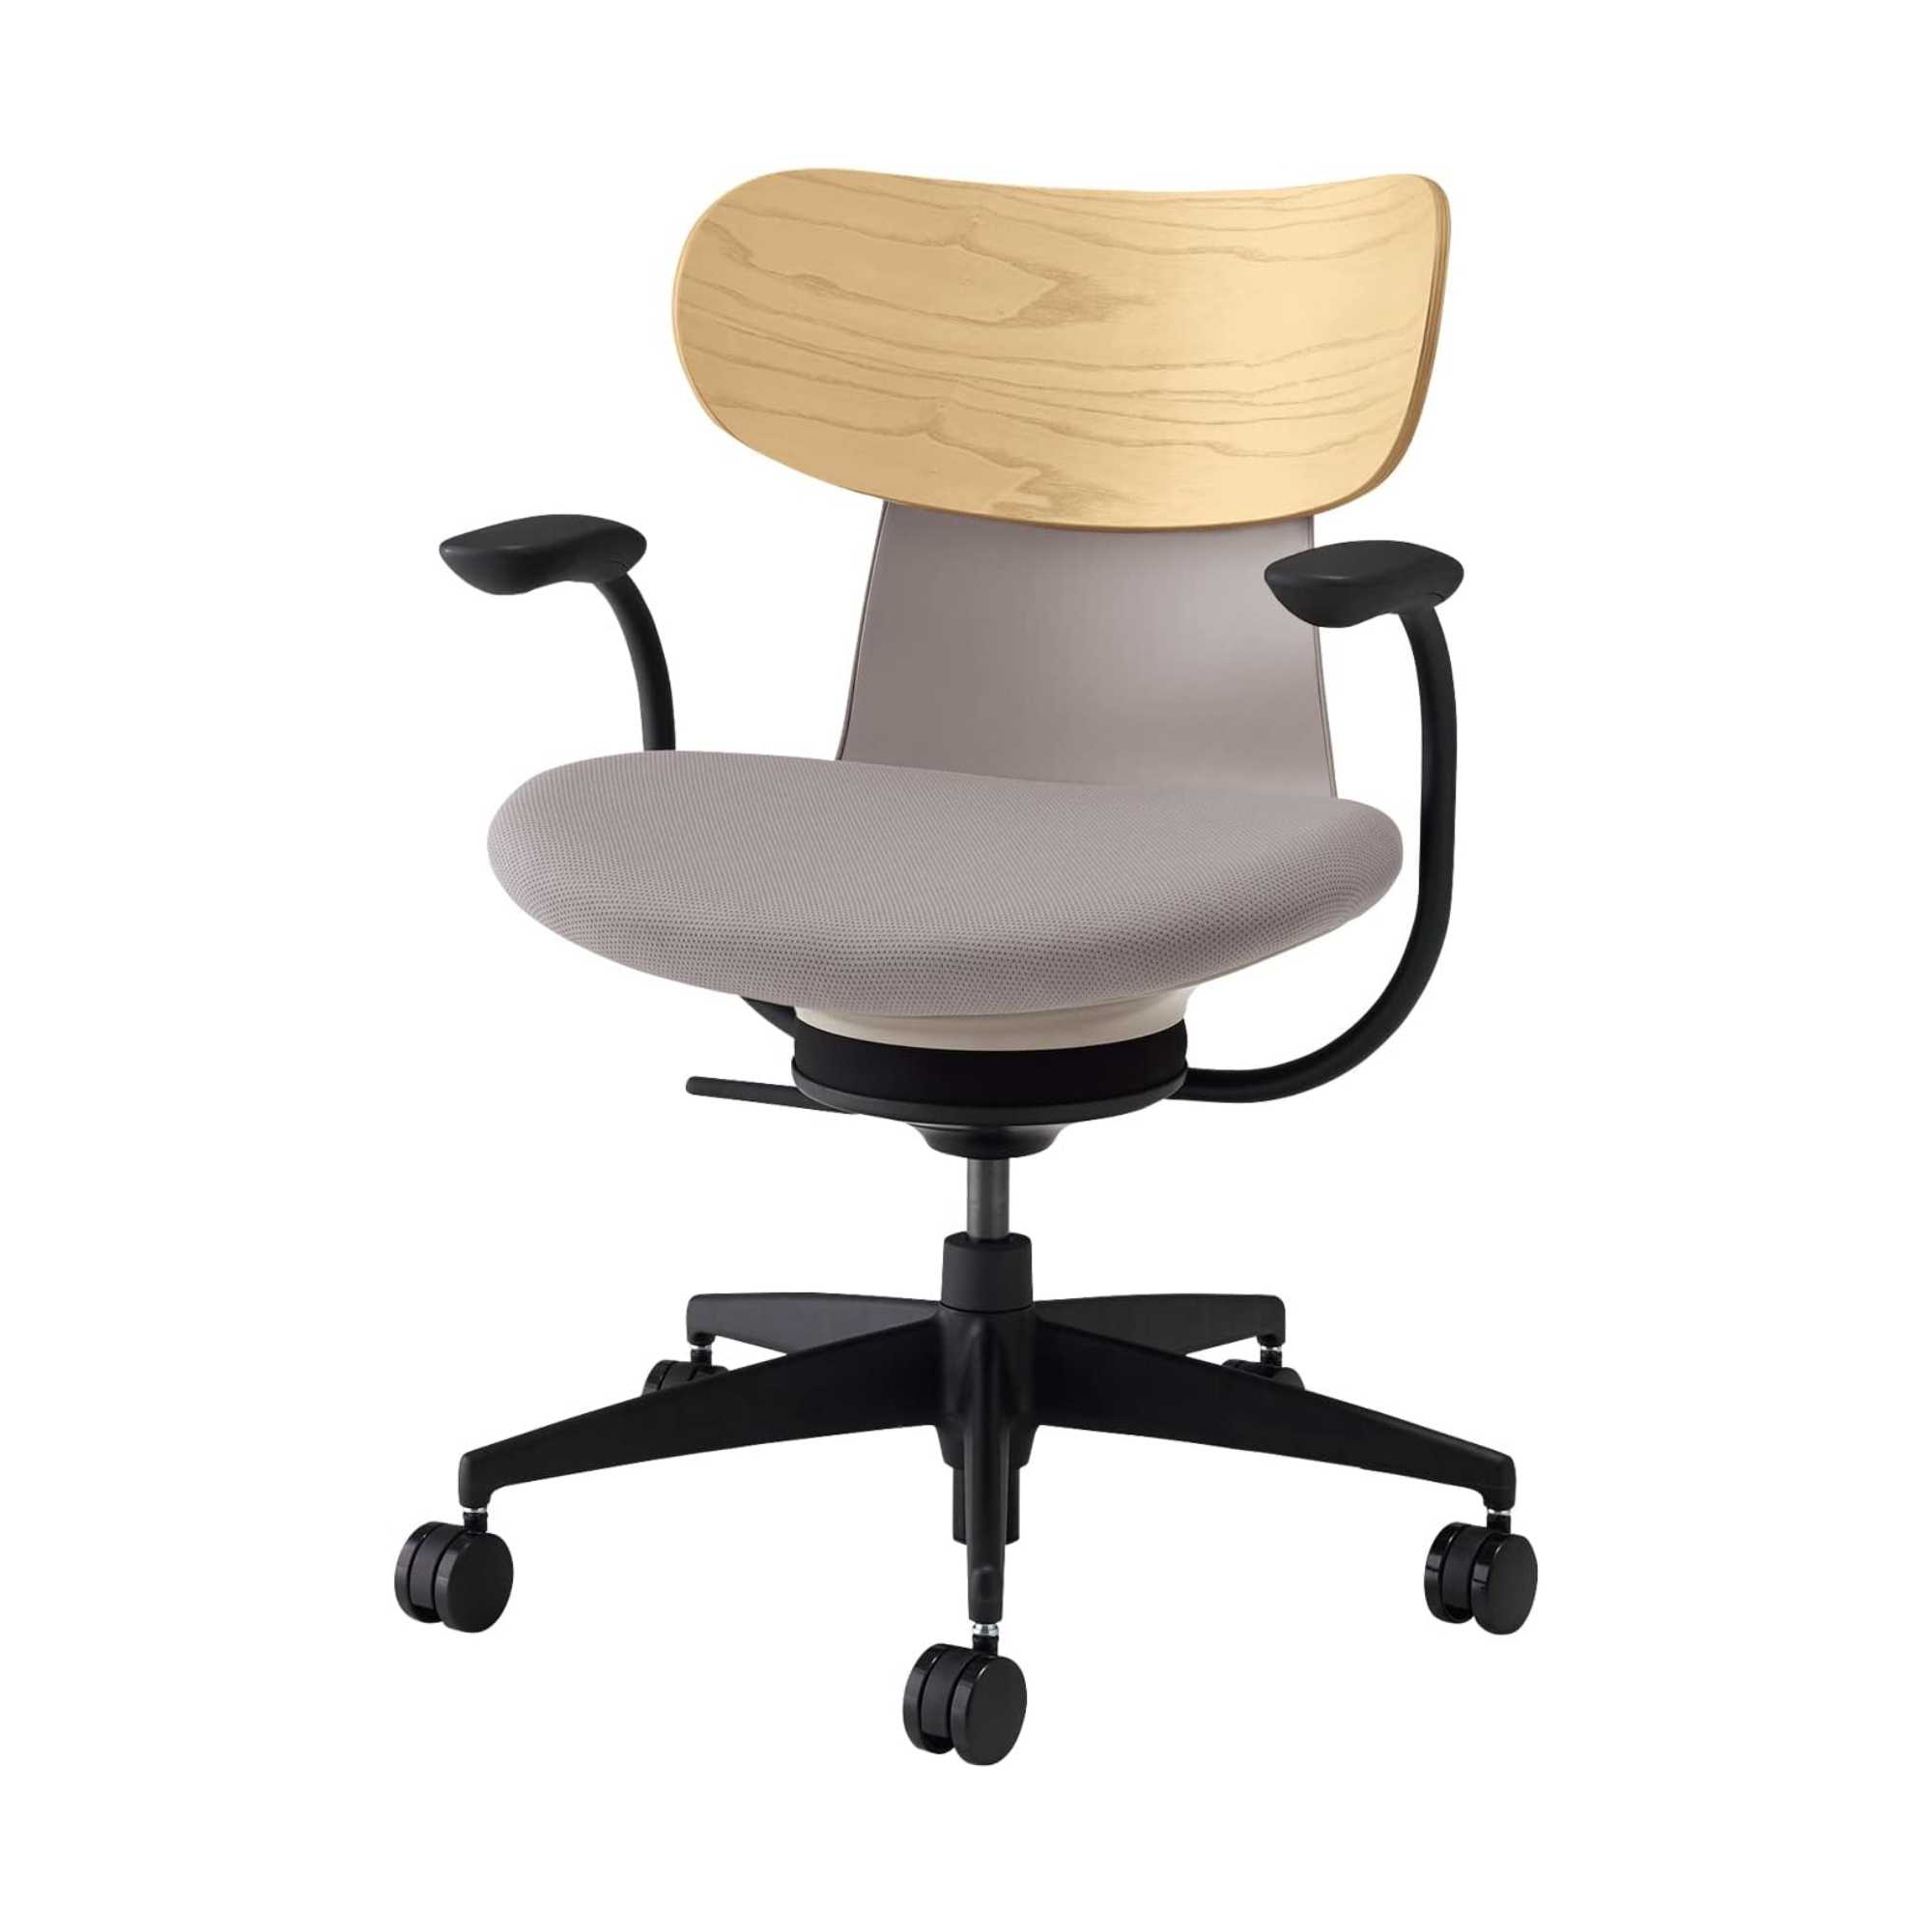 Kokuyo Inglife Office Chair Plywood Back with Arm, Grey